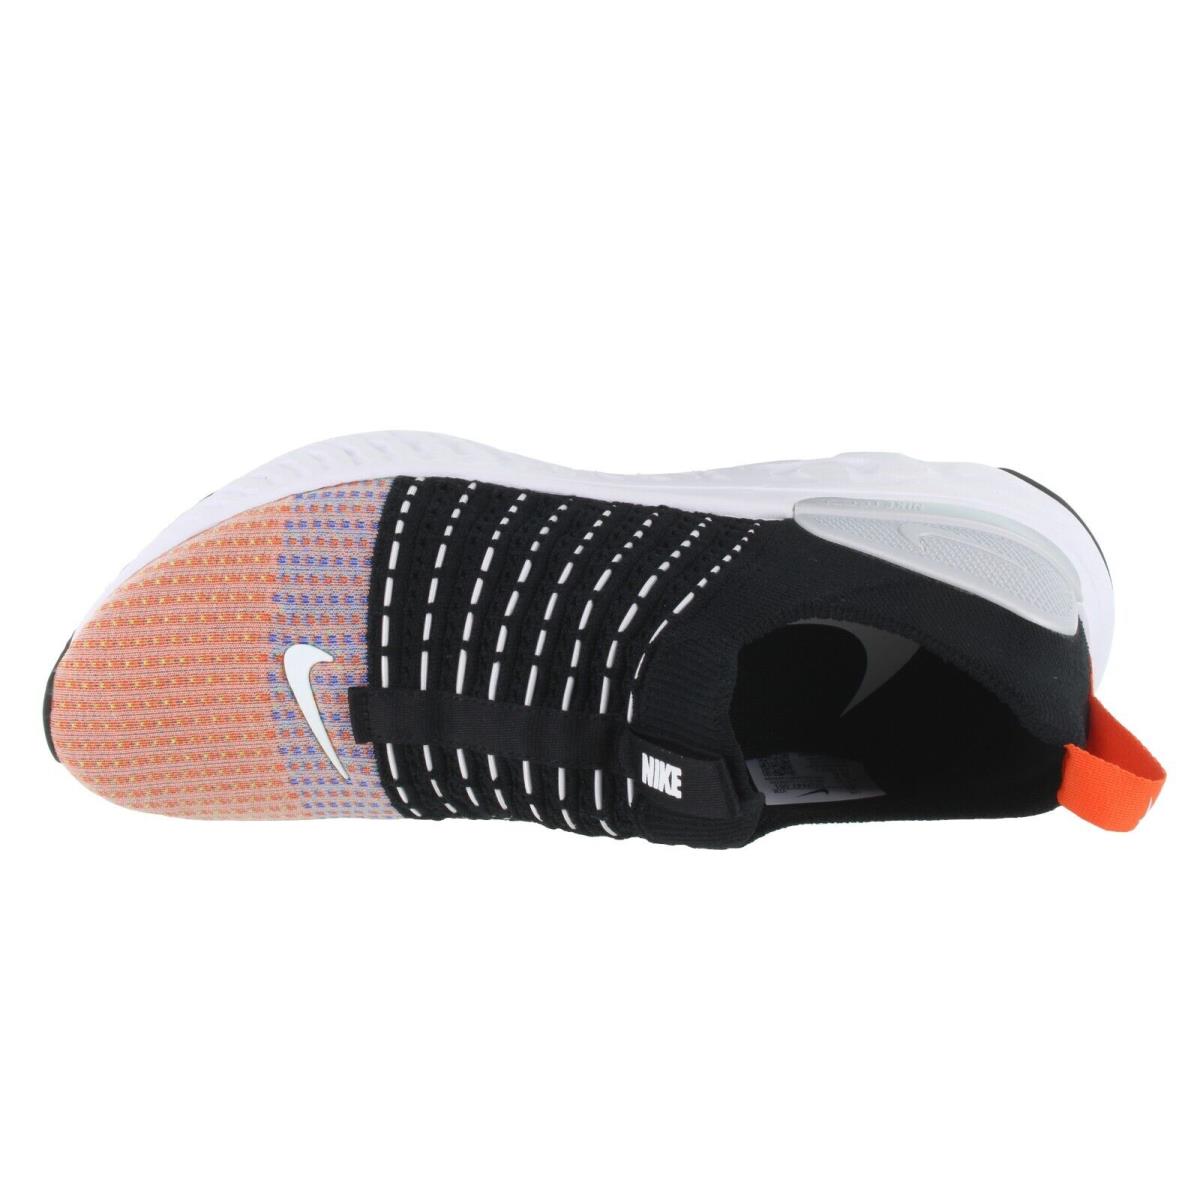 Nike shoes Phantom Run Flyknit - Black, White, Team Orange, Electric Green 2